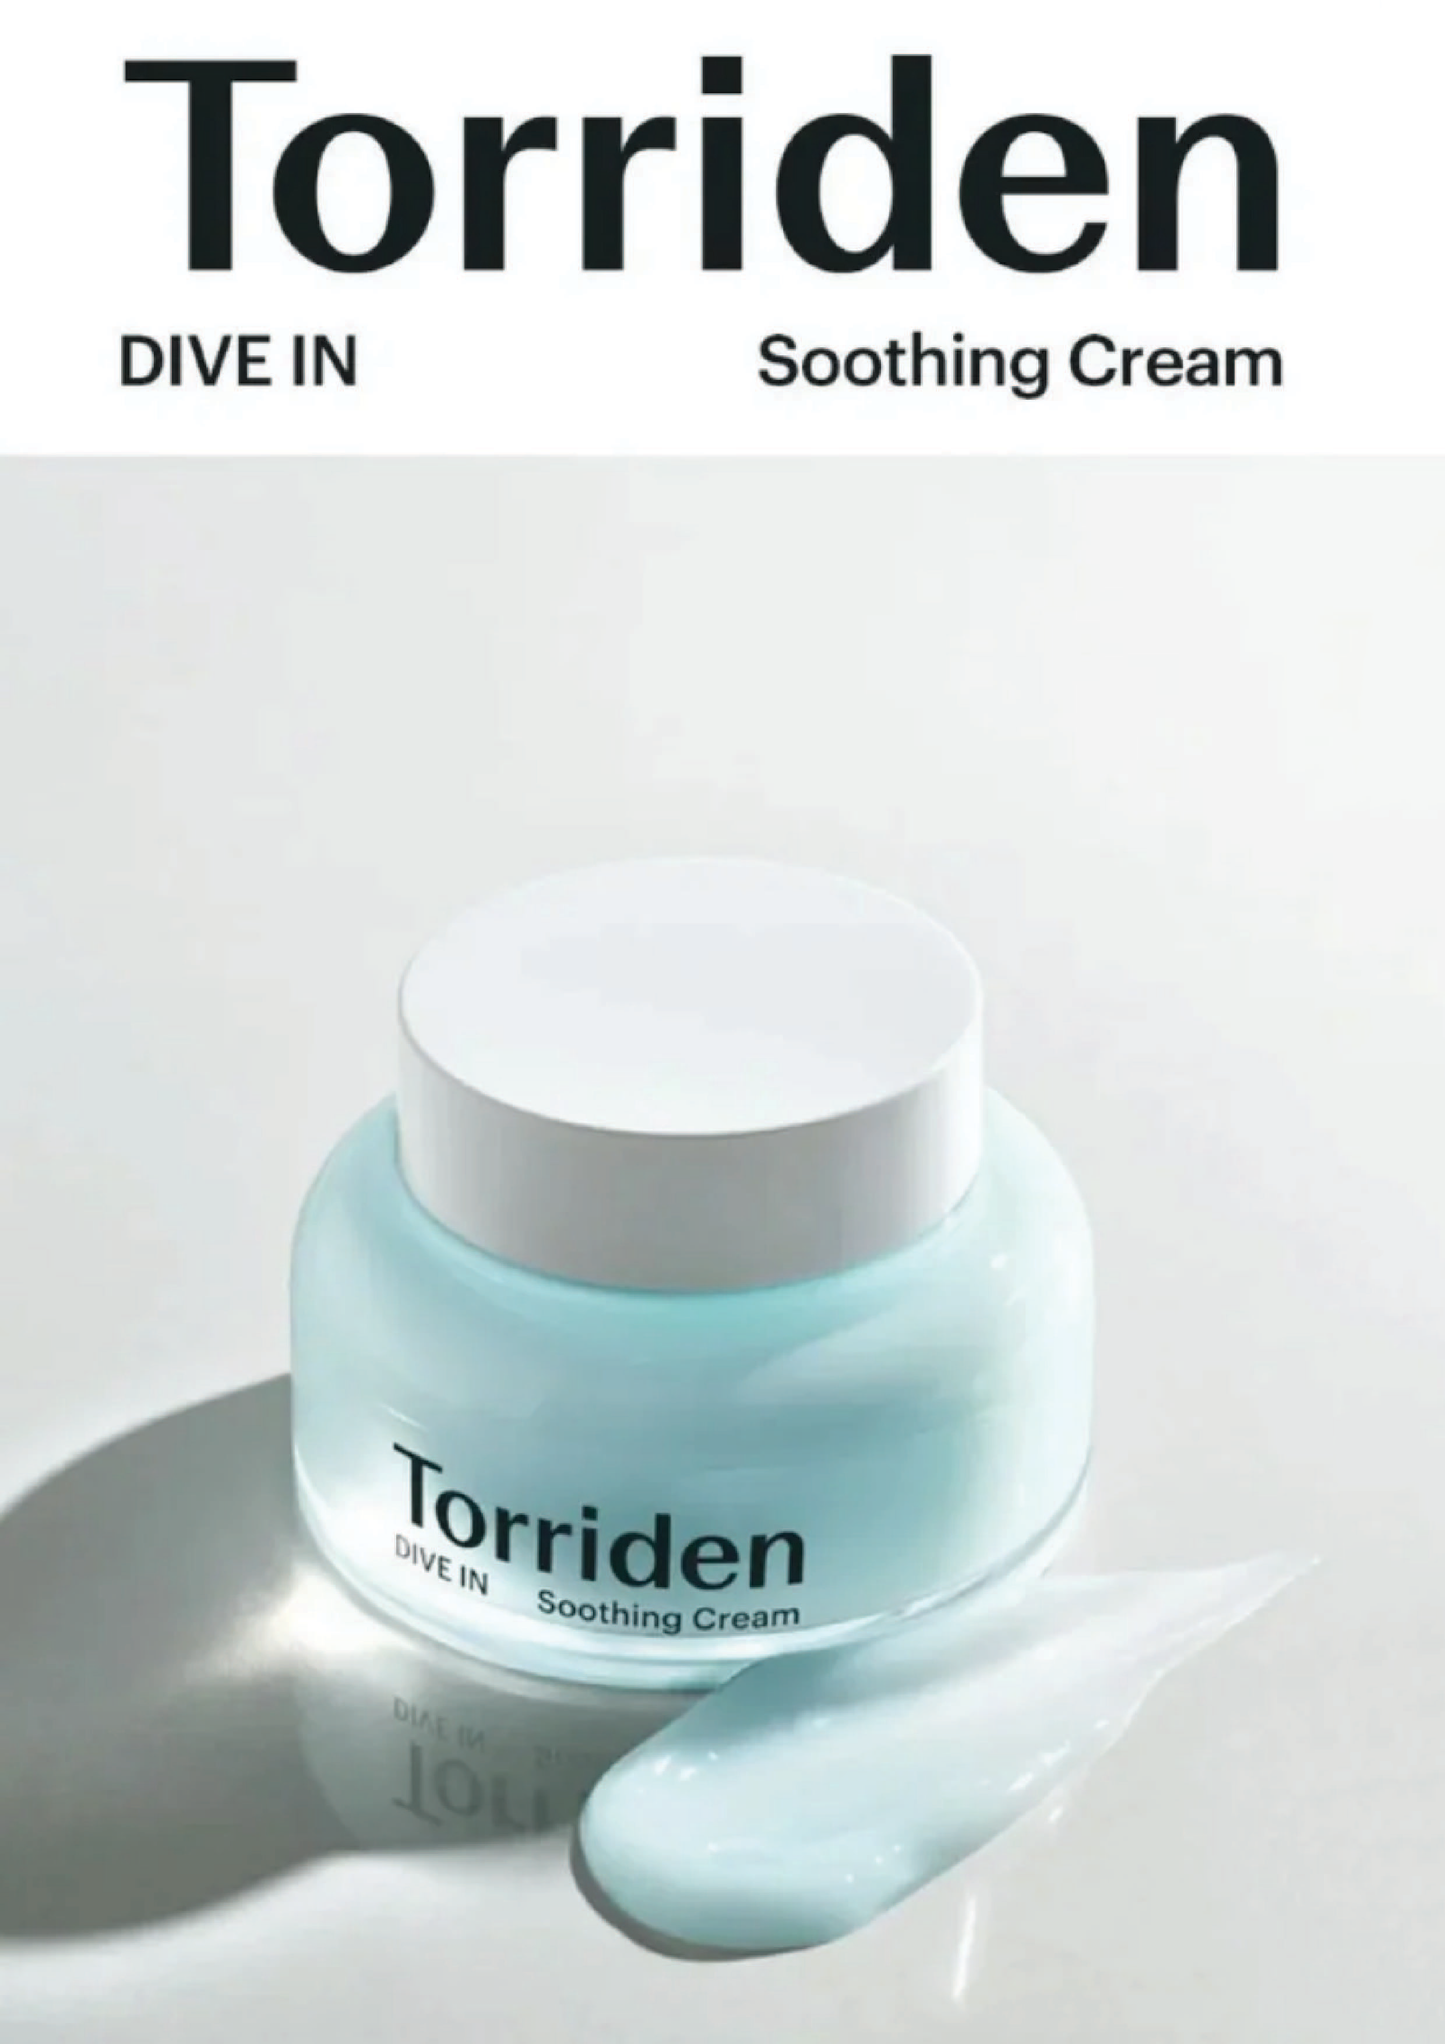 Torriden Dive-In Soothing Cream/ Creme Apaisant D'acide Hyaluronique